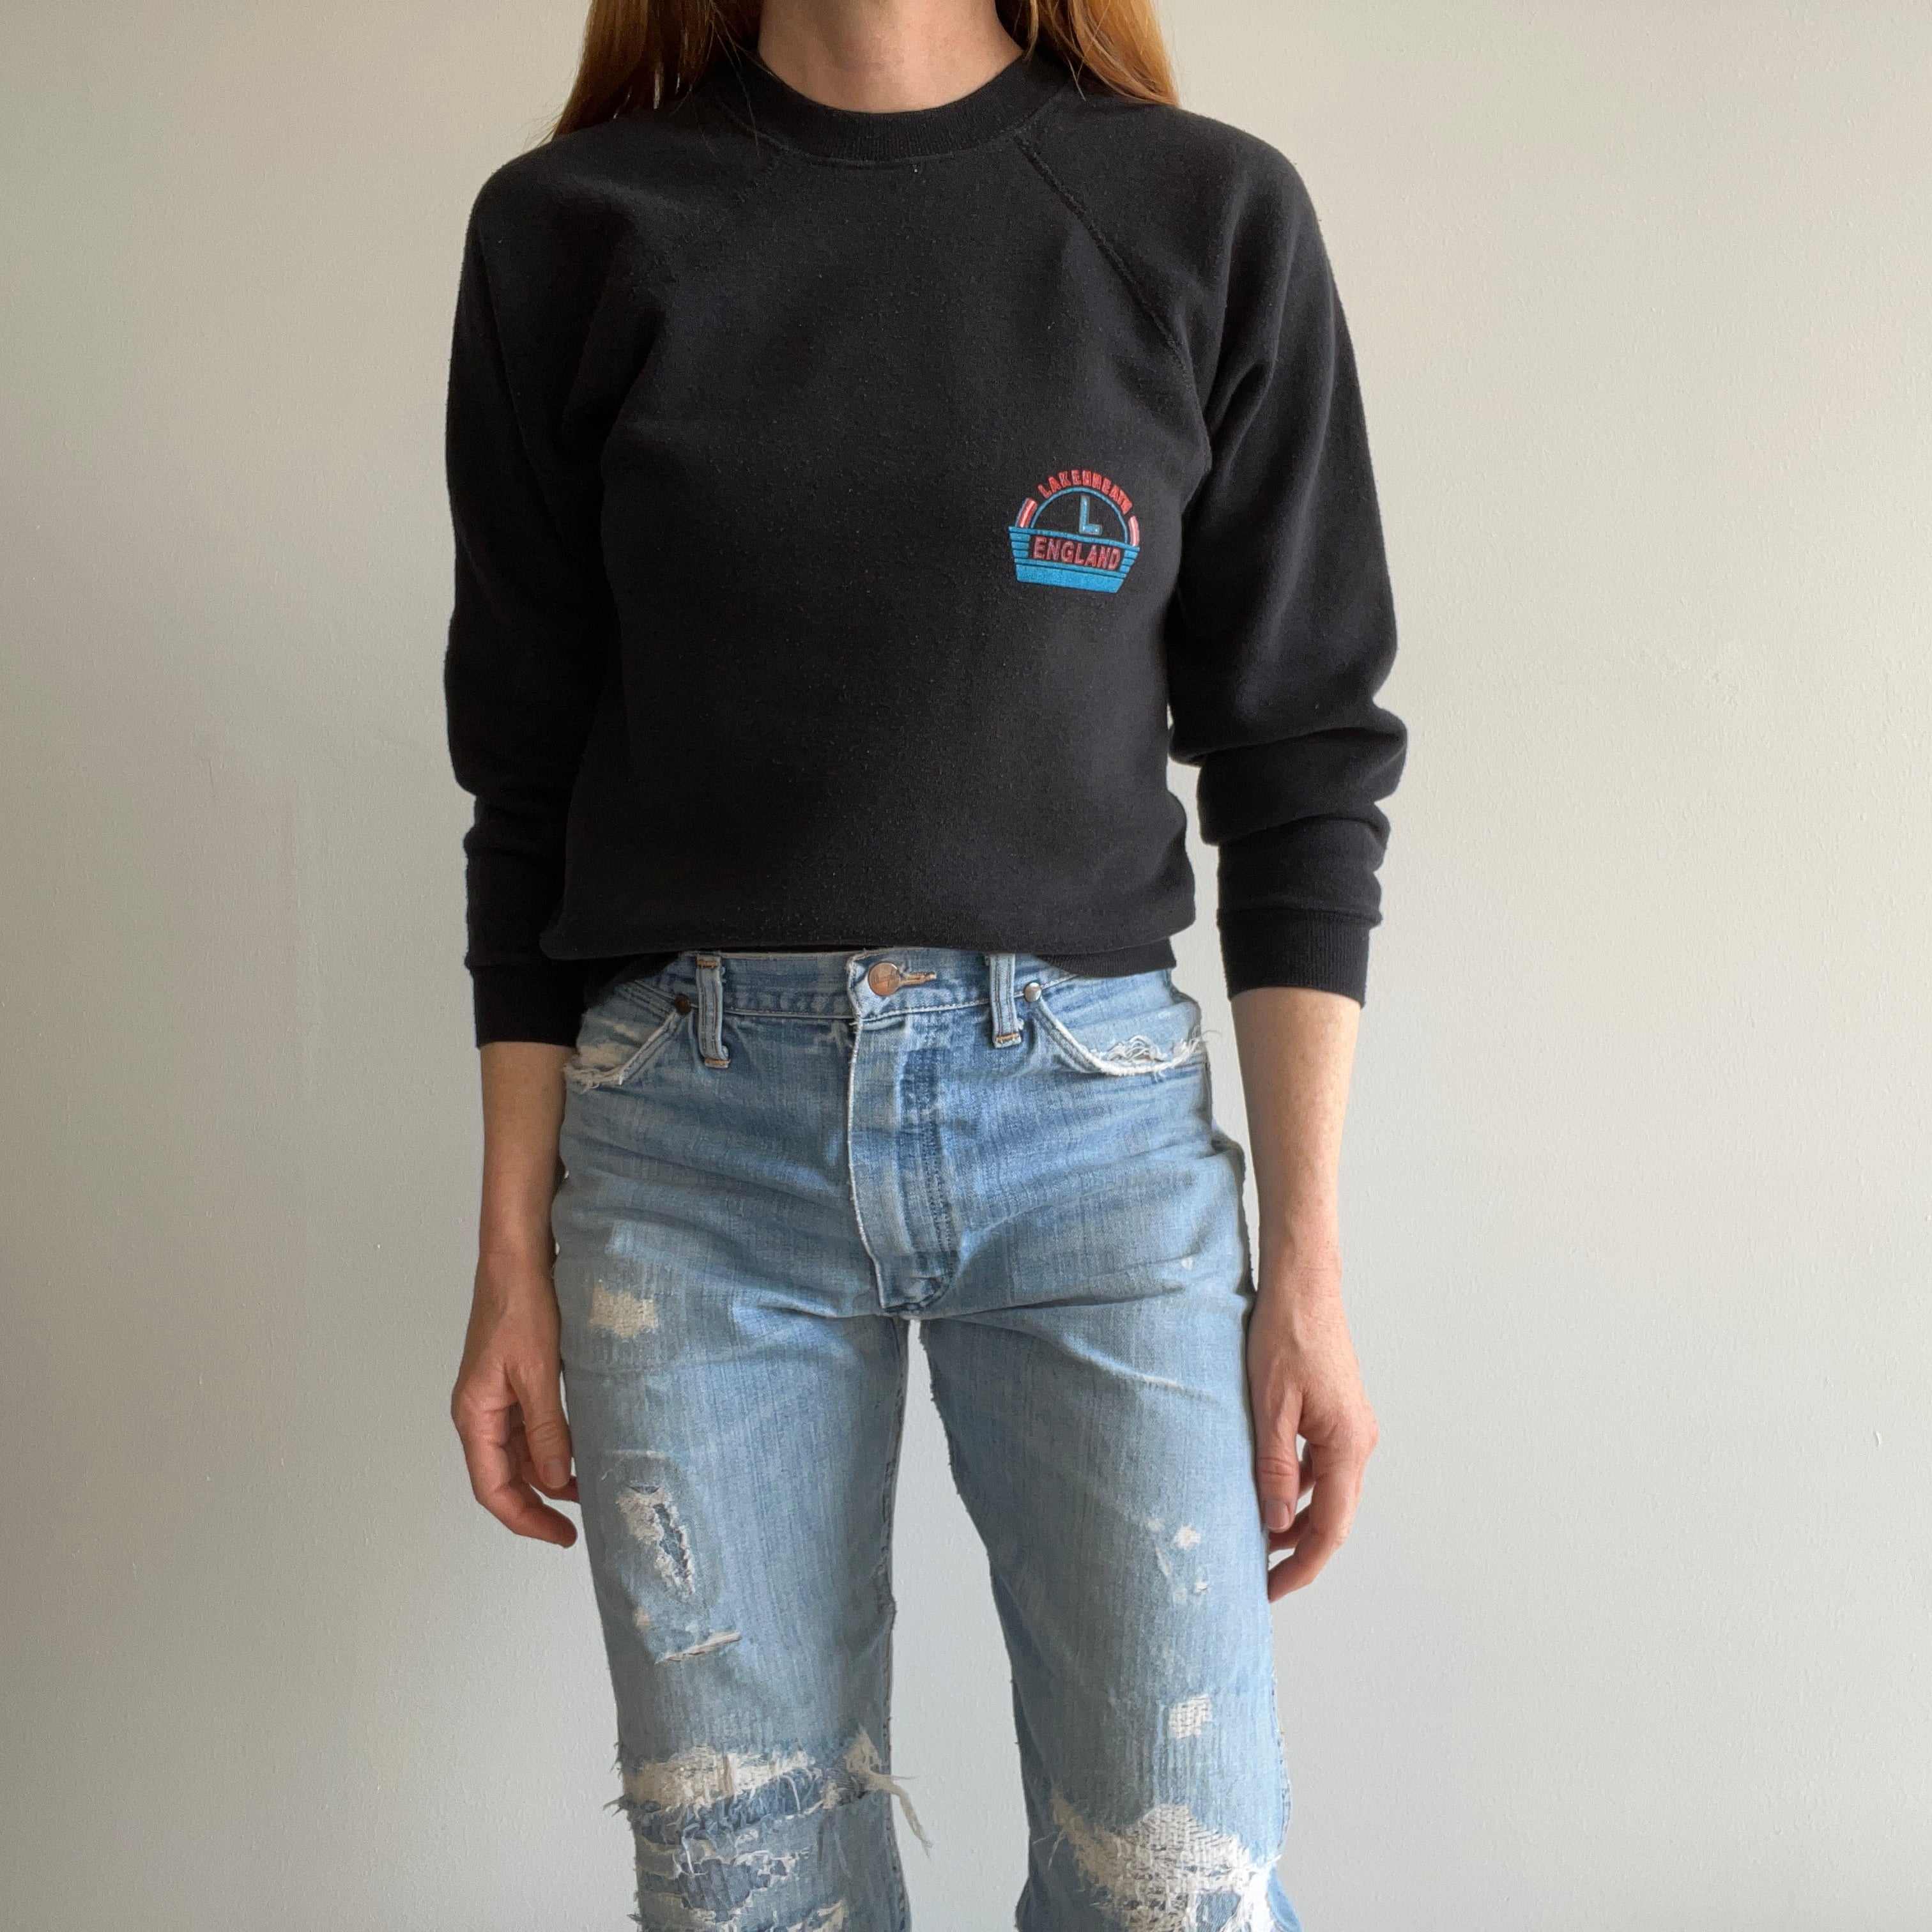 1980s Lakenheath England Sweatshirt by Artex (USA Made)